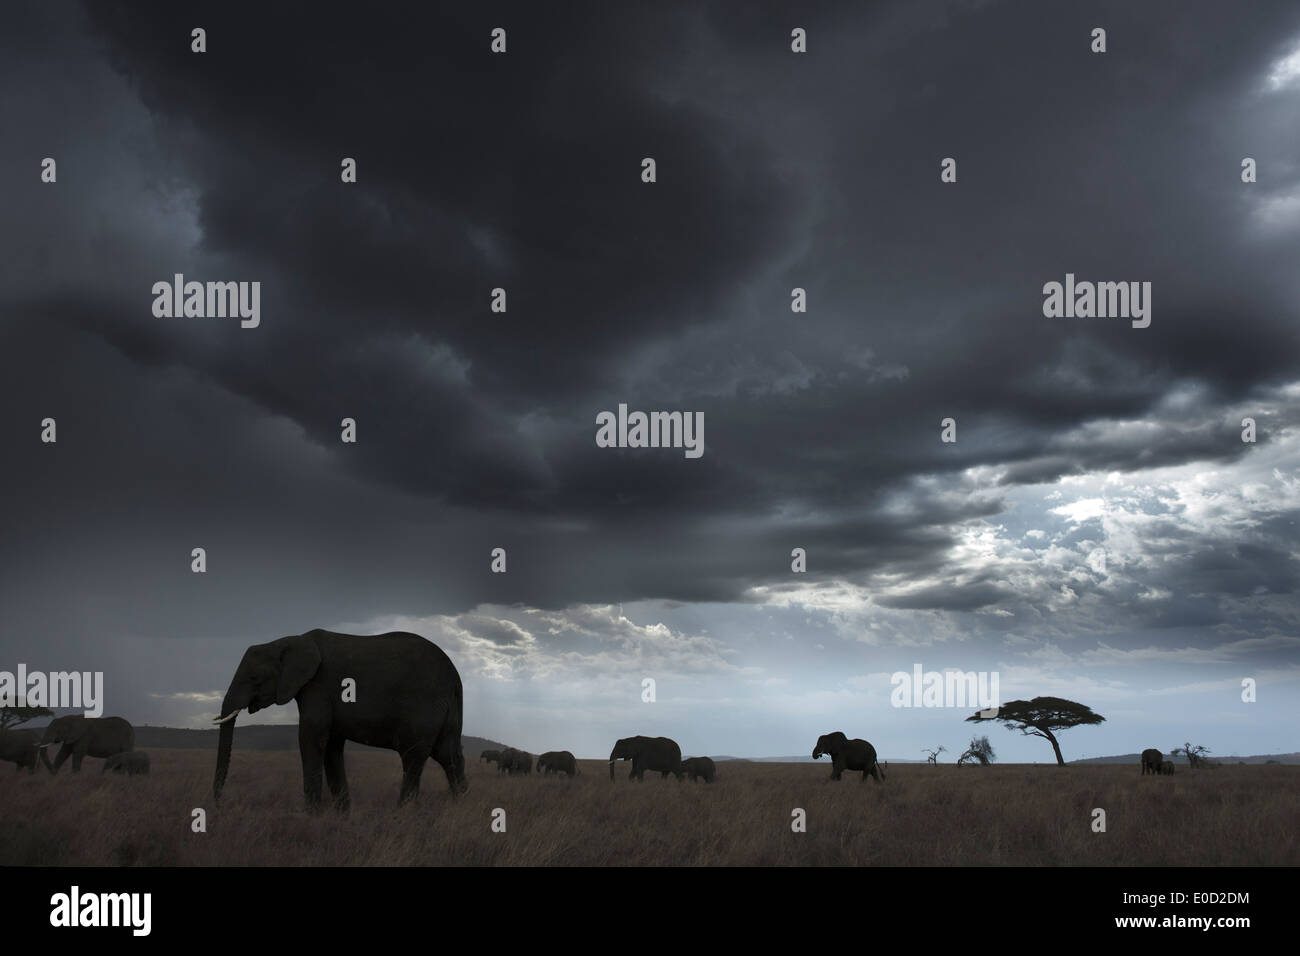 Elephants and storm clouds, Tanzania (Loxodonta africana) Stock Photo